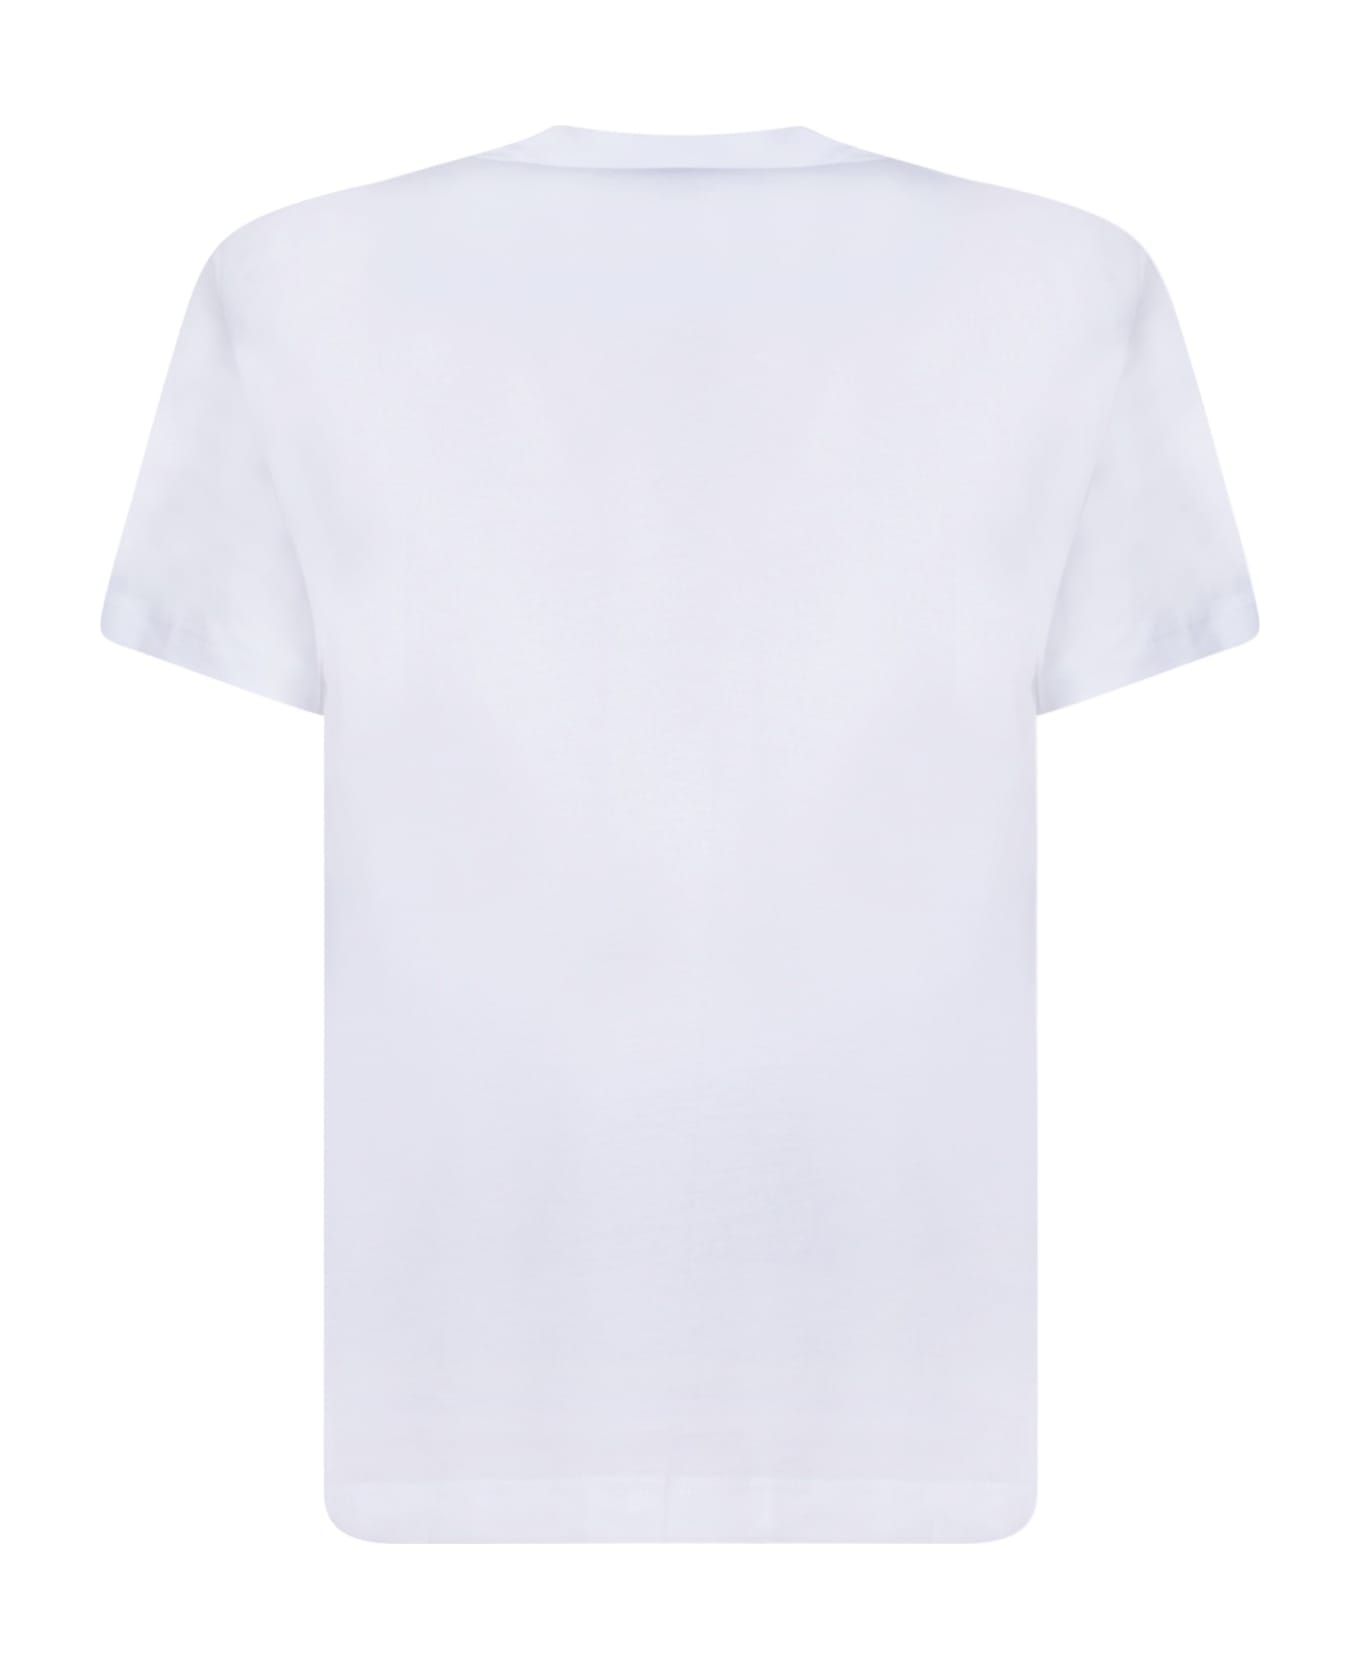 Comme des Garçons Shirt Marilyng White T-shirt - White